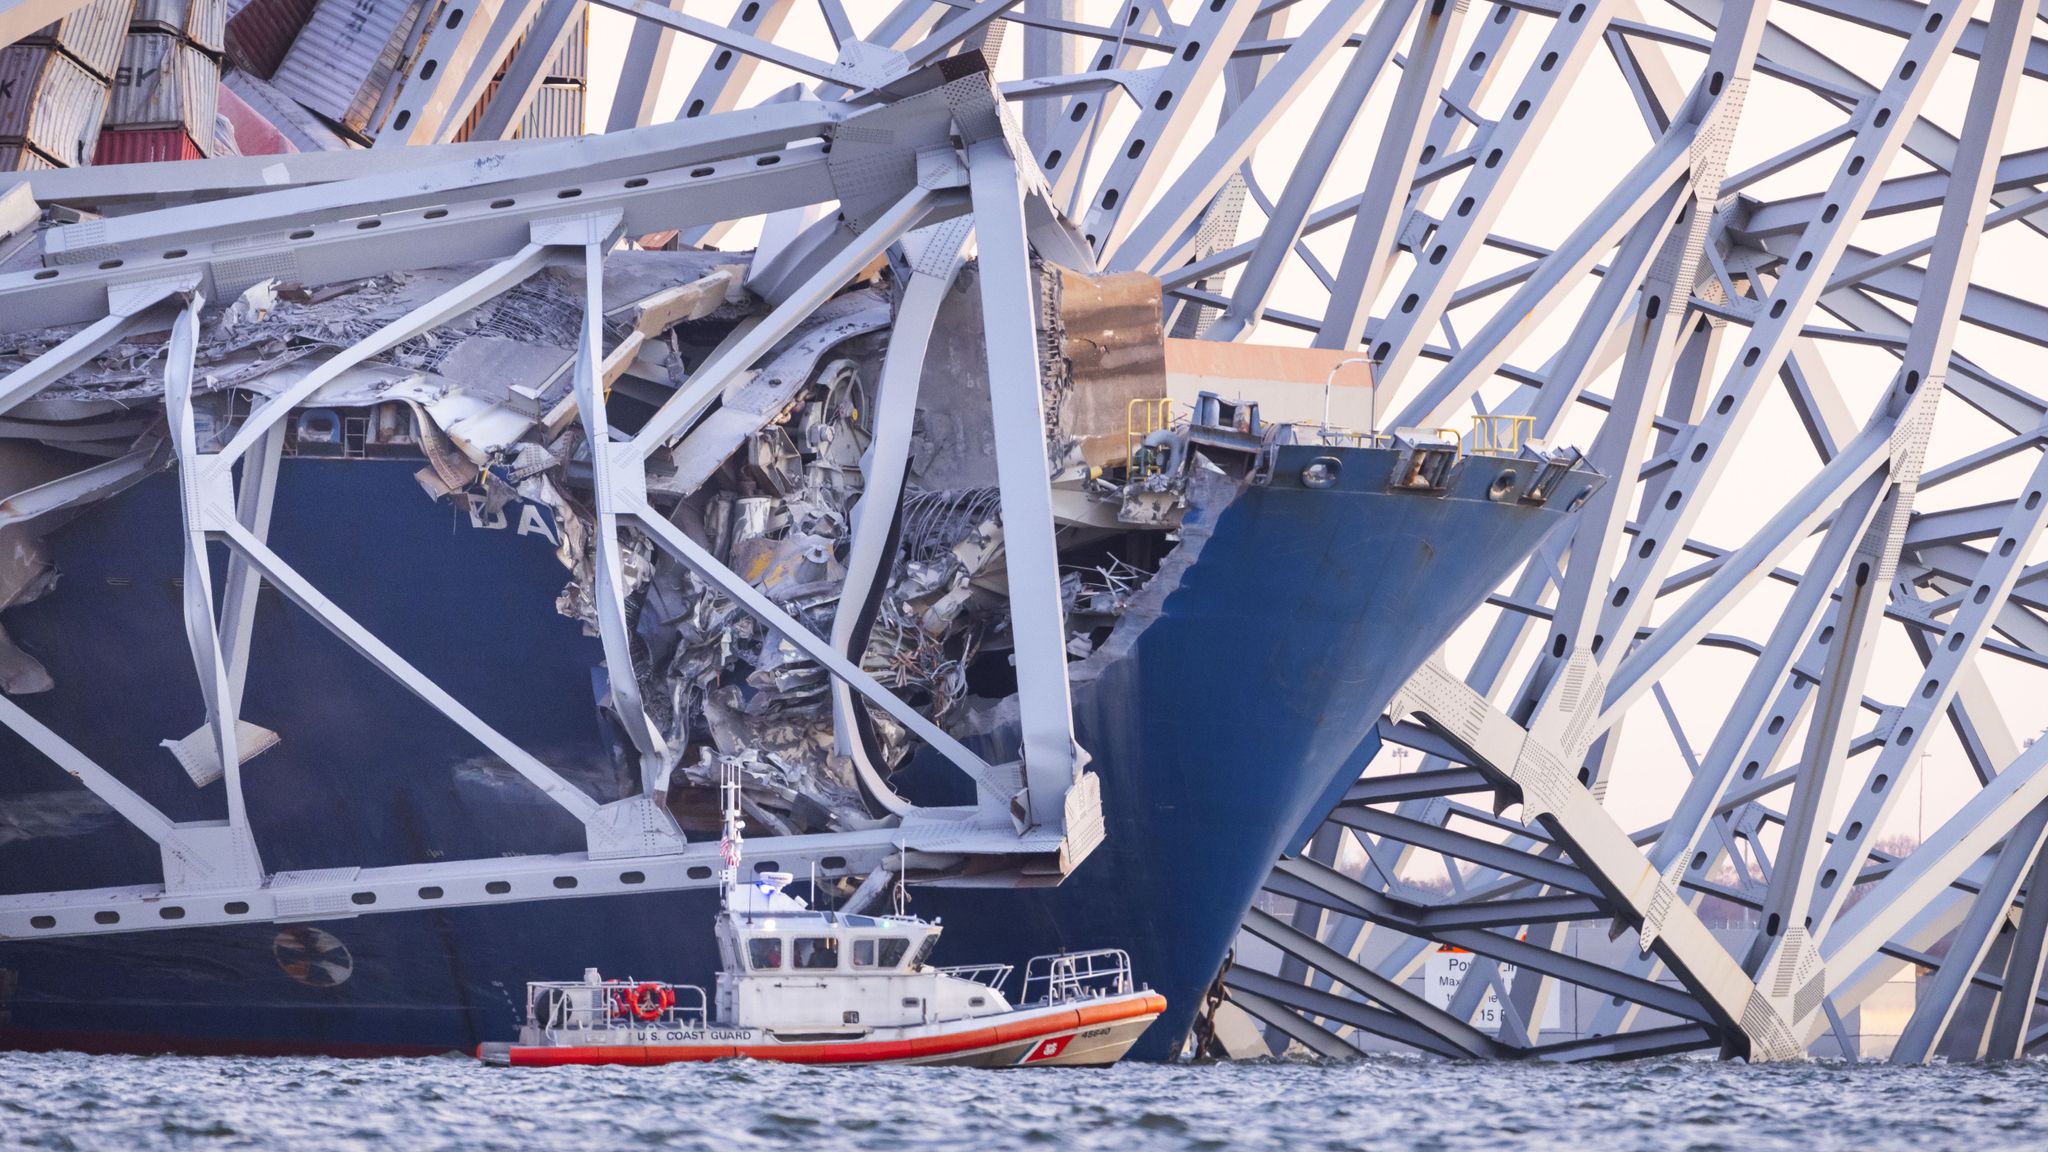 Baltimore bridge collapse: Six presumed dead after ship collides with bridge